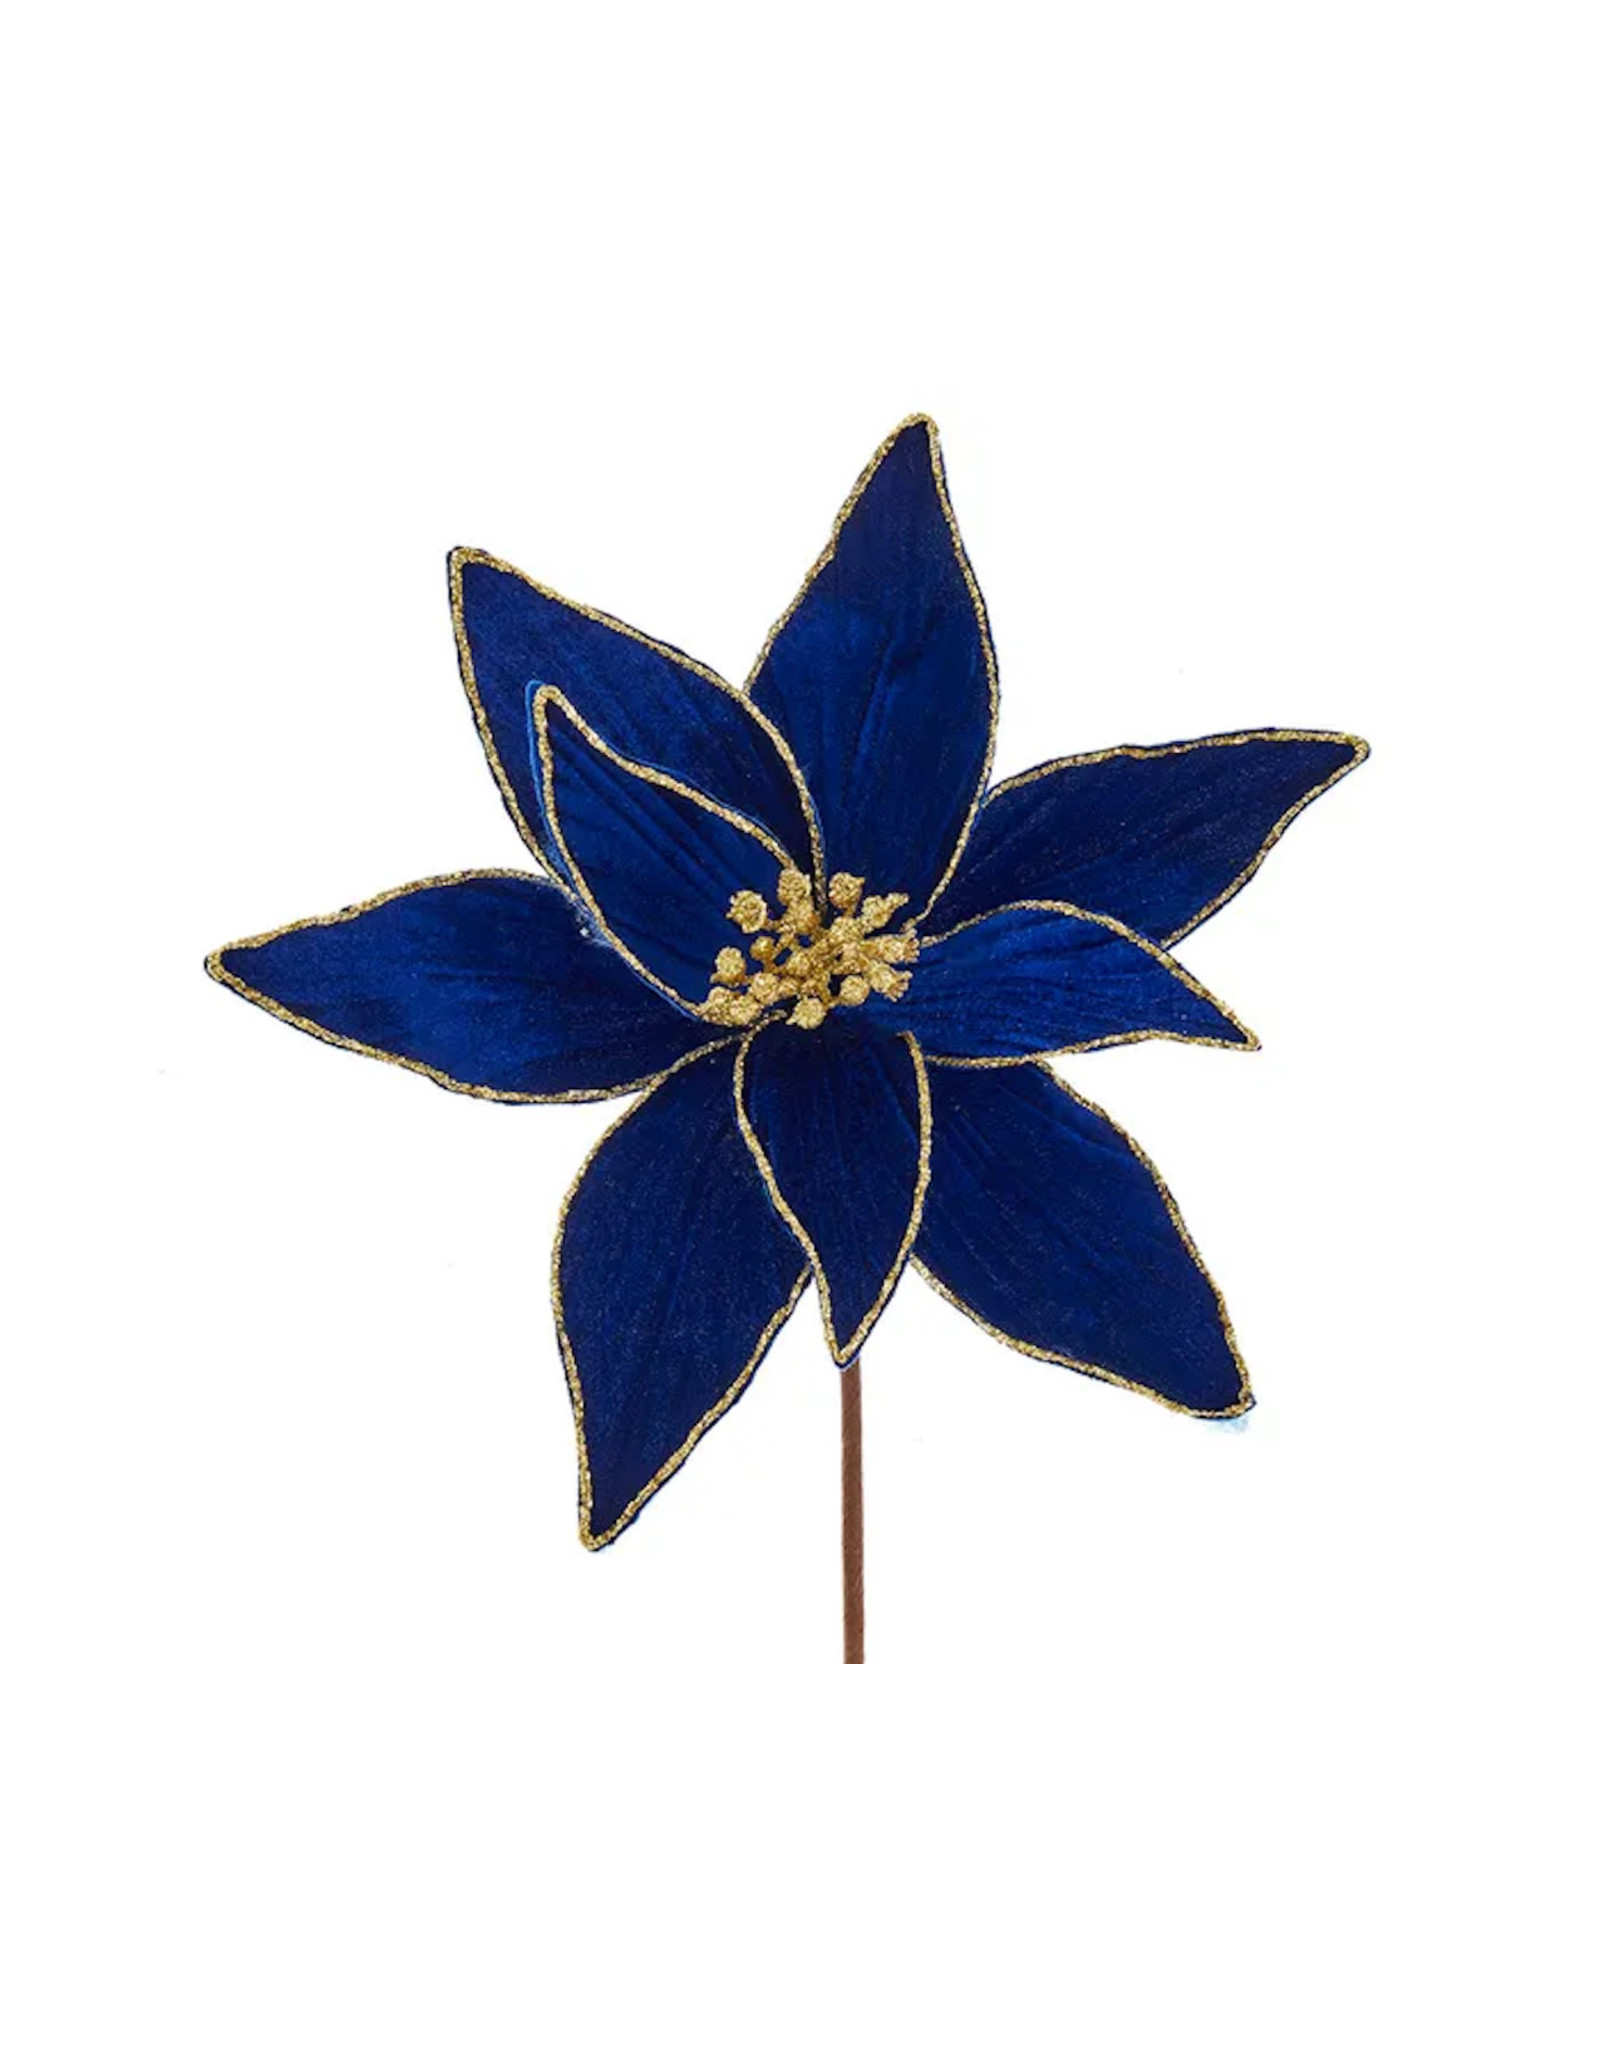 Kurt Adler Poinsettia Picks Royal Blue And Gold 14 Inch Poinsettia